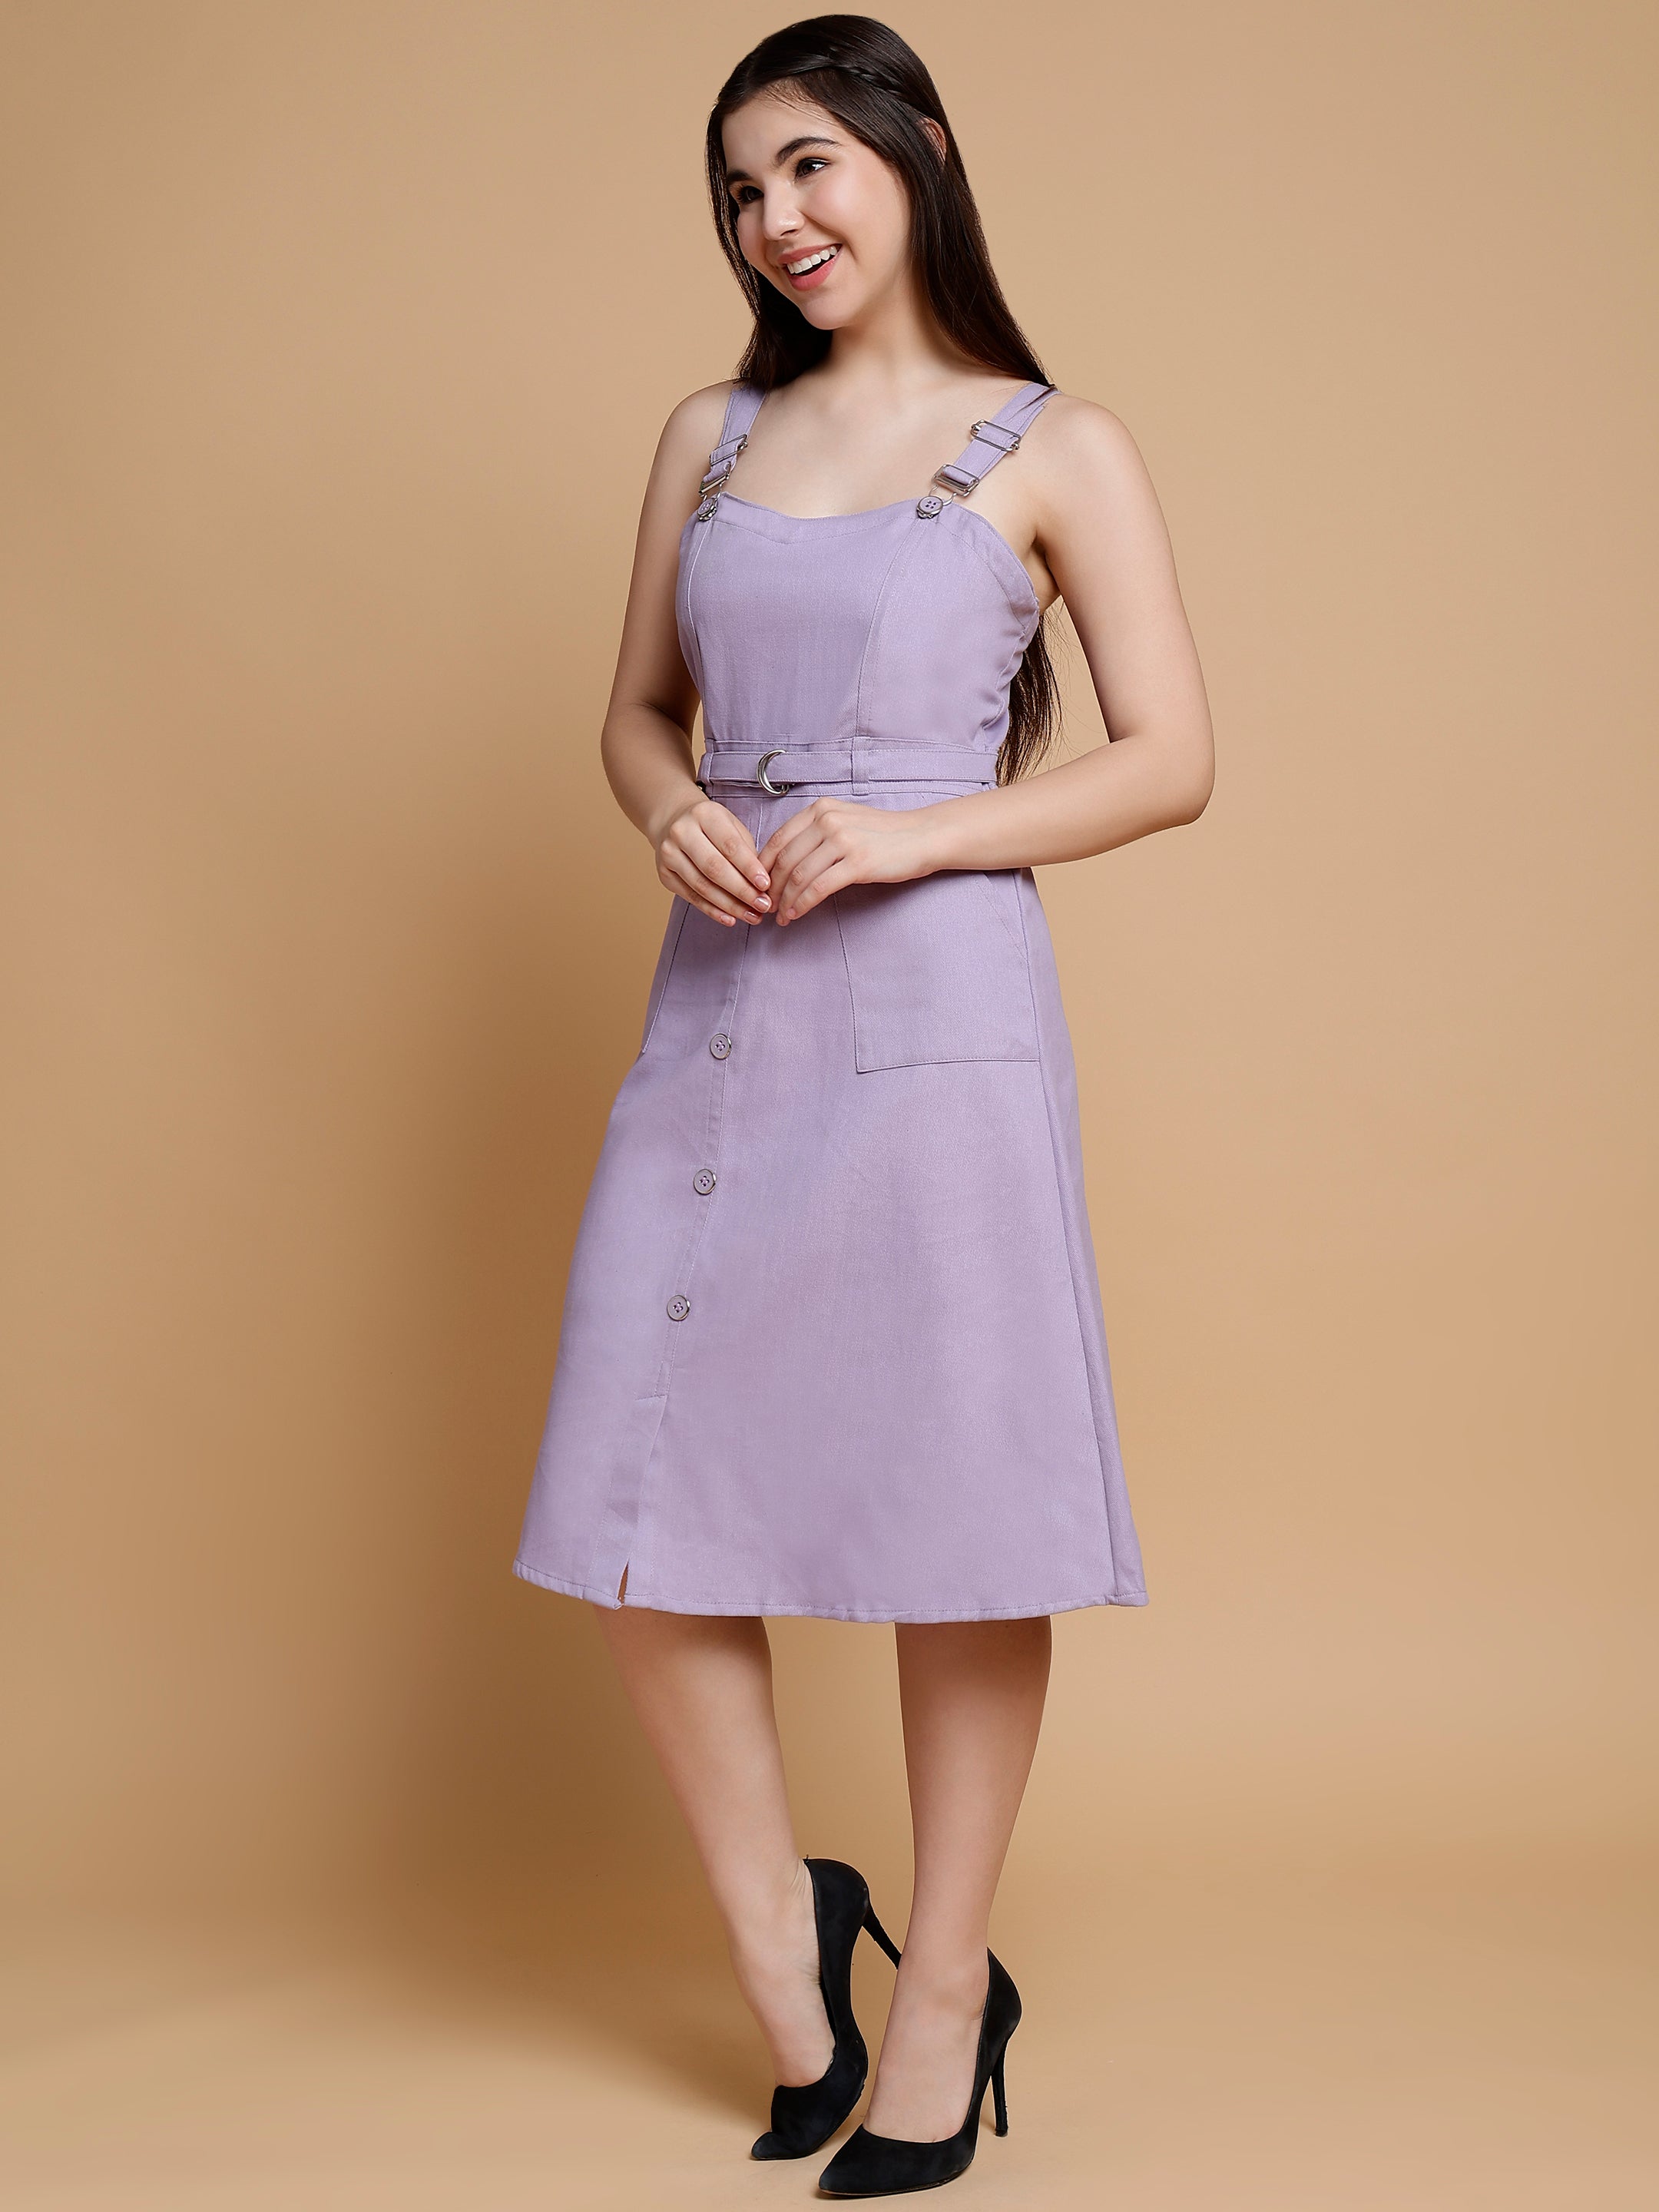 Glamoda A-Line Lavender Dress